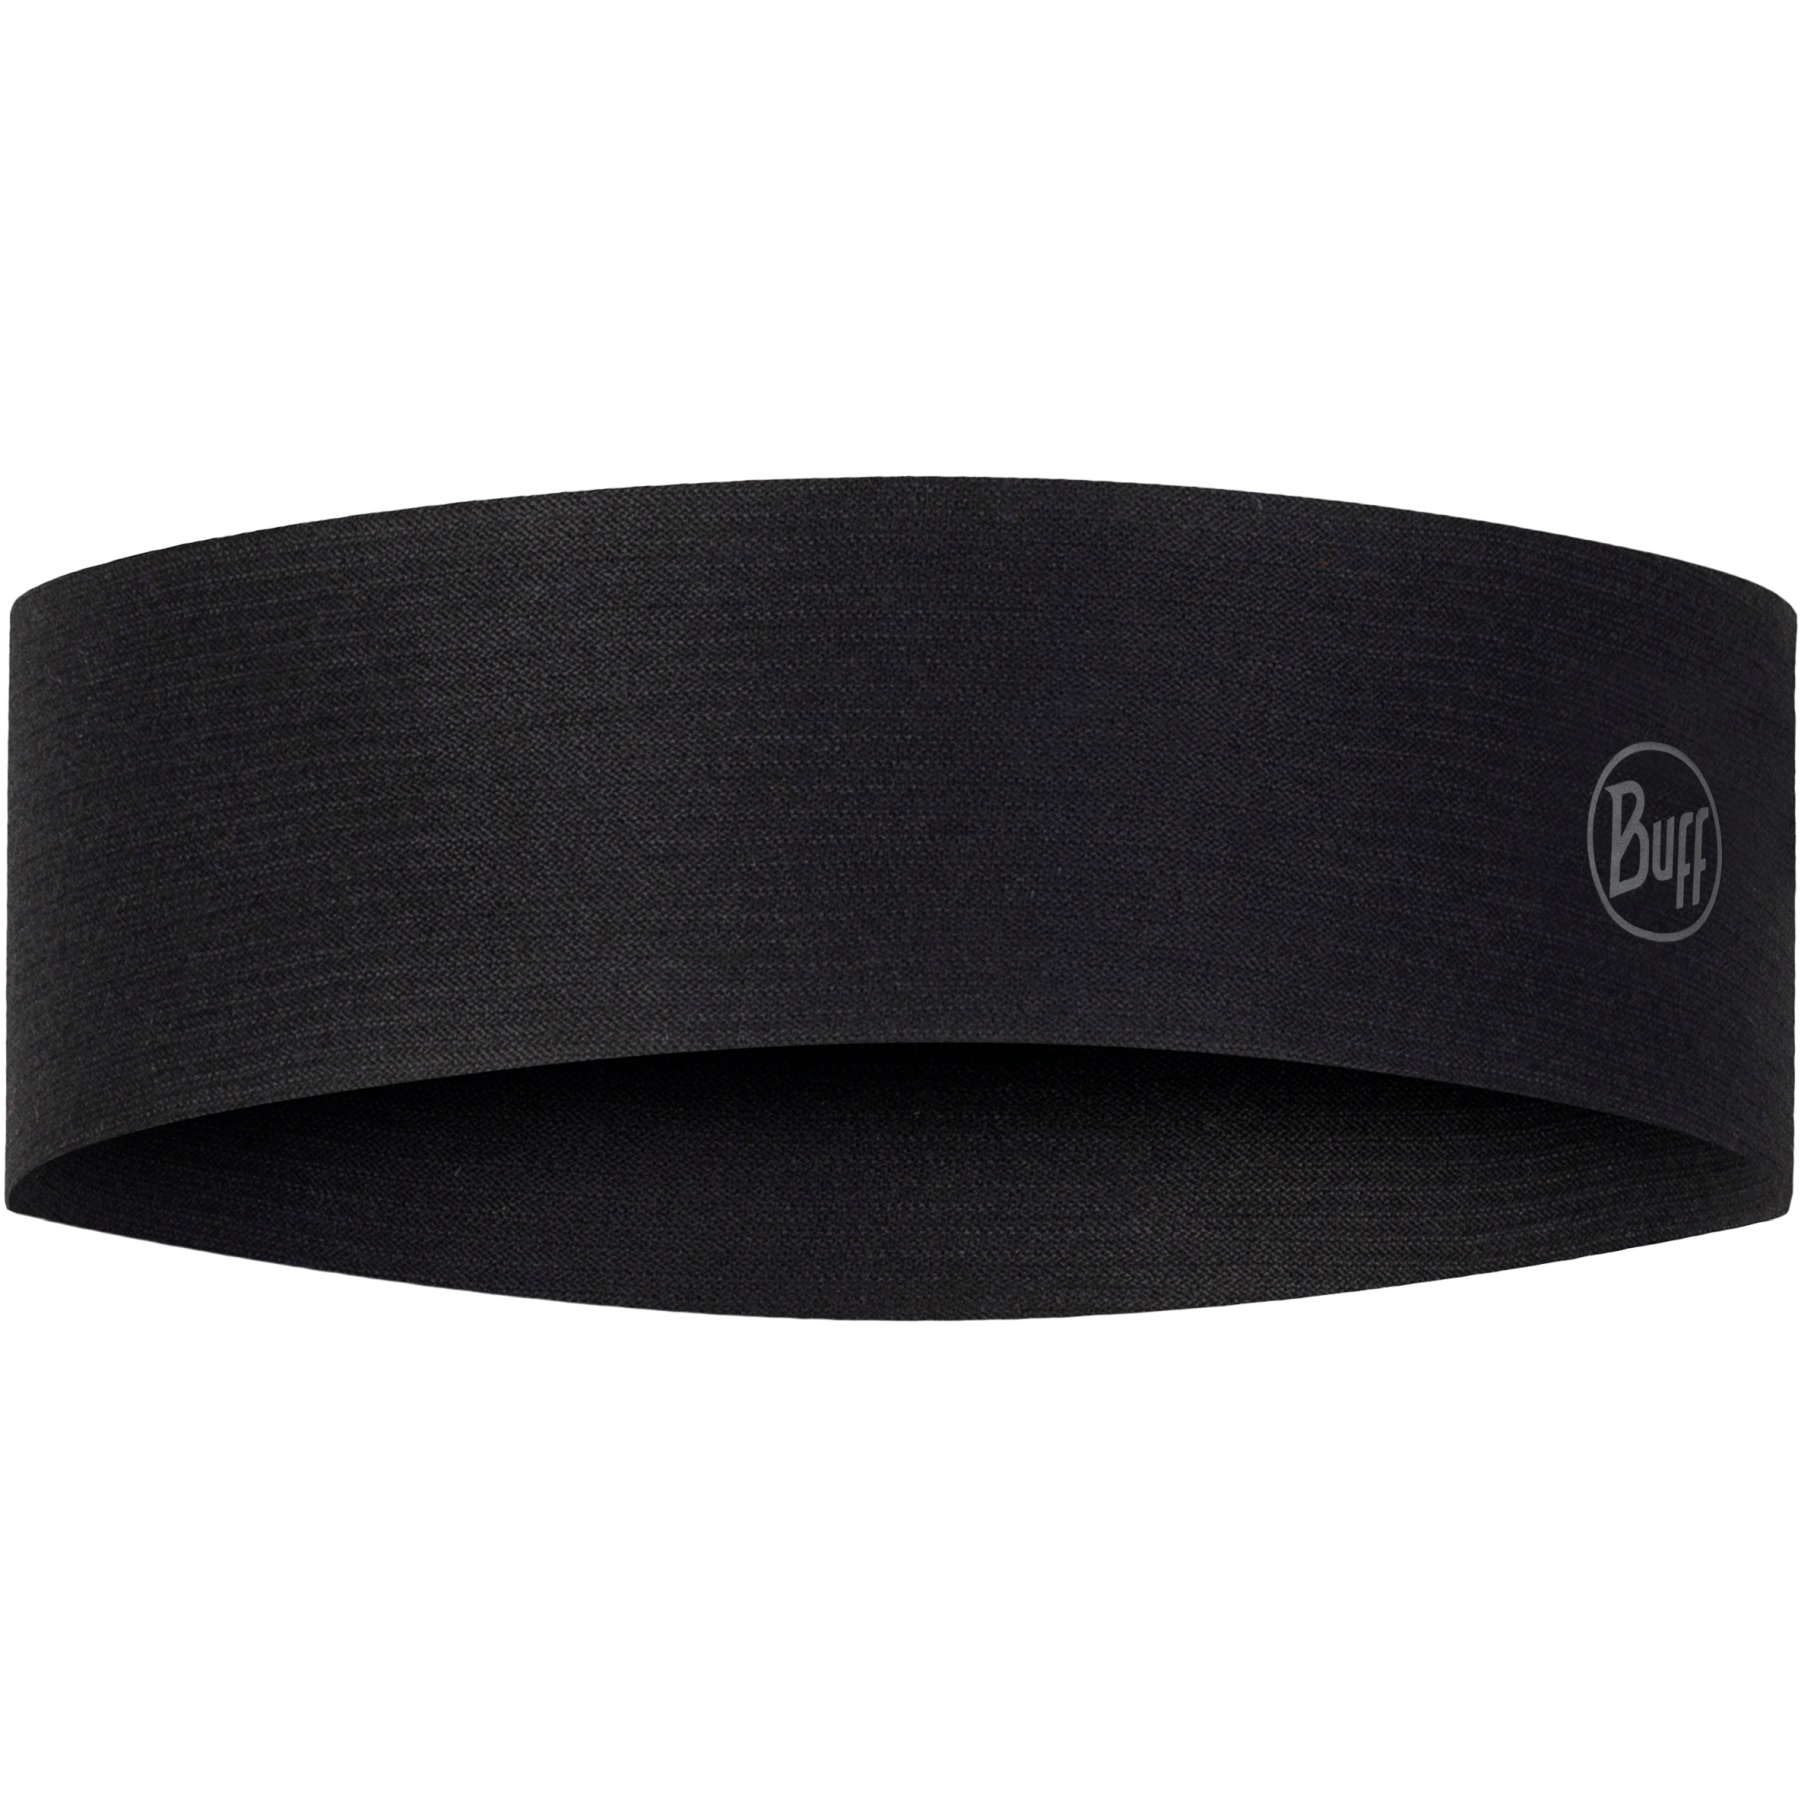 Productfoto van Buff® CoolNet UV Slim Hoofdband Unisex - Solid Black